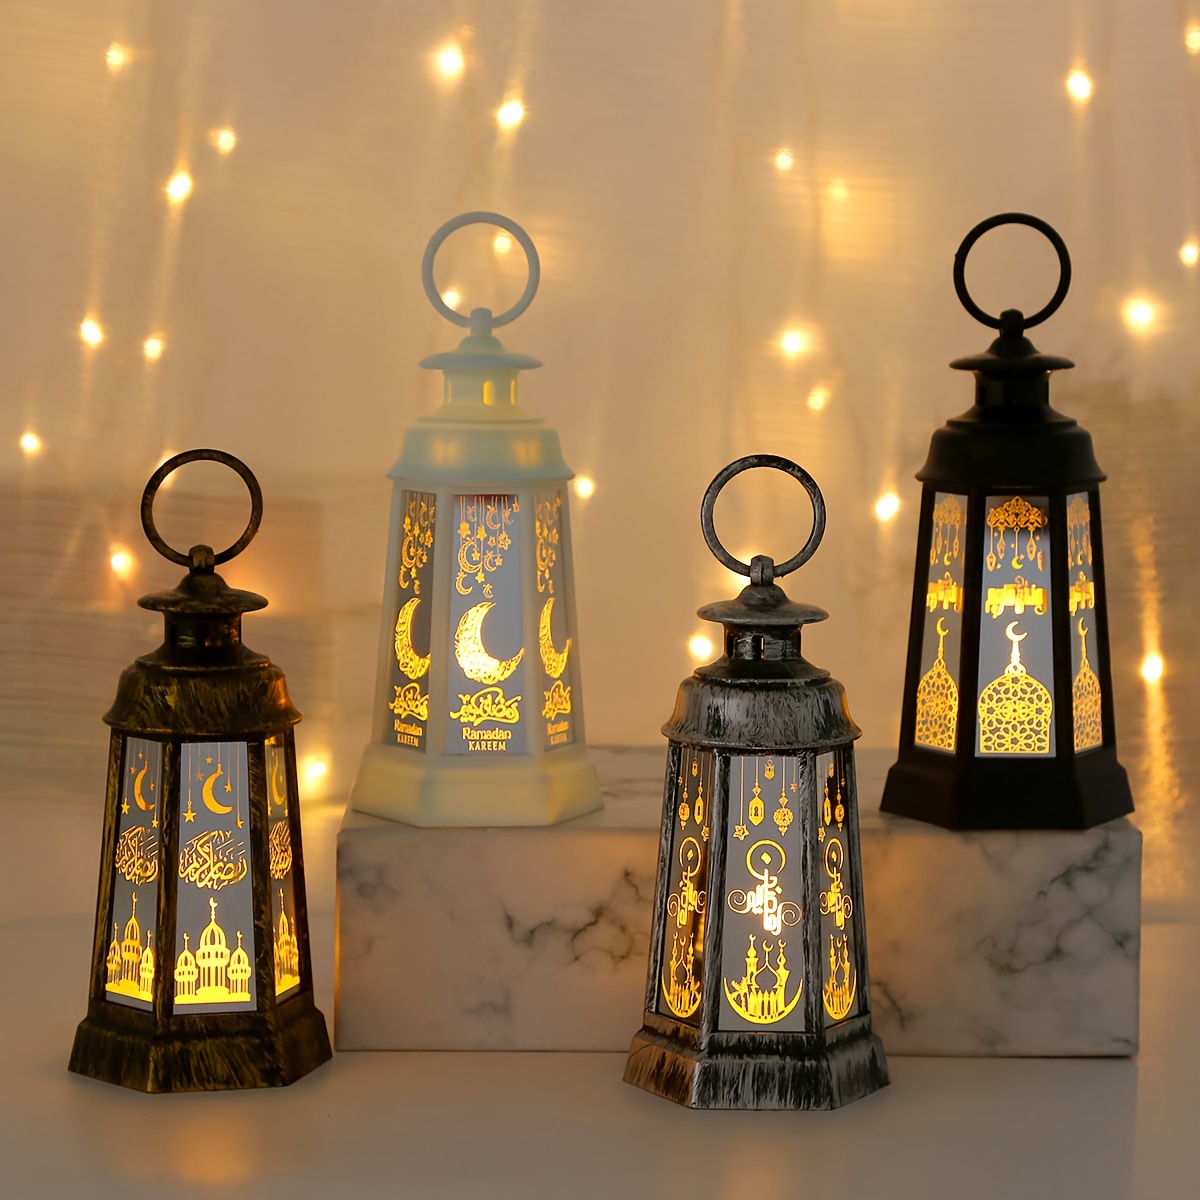 Dome Ramadan Lights,Eid Ramadan Ornaments,Table Decor Lights,Mubarak Decorative  Lamp,Eid al-Fitr Hexagonal Wind Lights,Ramadan Festival Lantern  Ornaments,for Ramadan Holiday Decor 